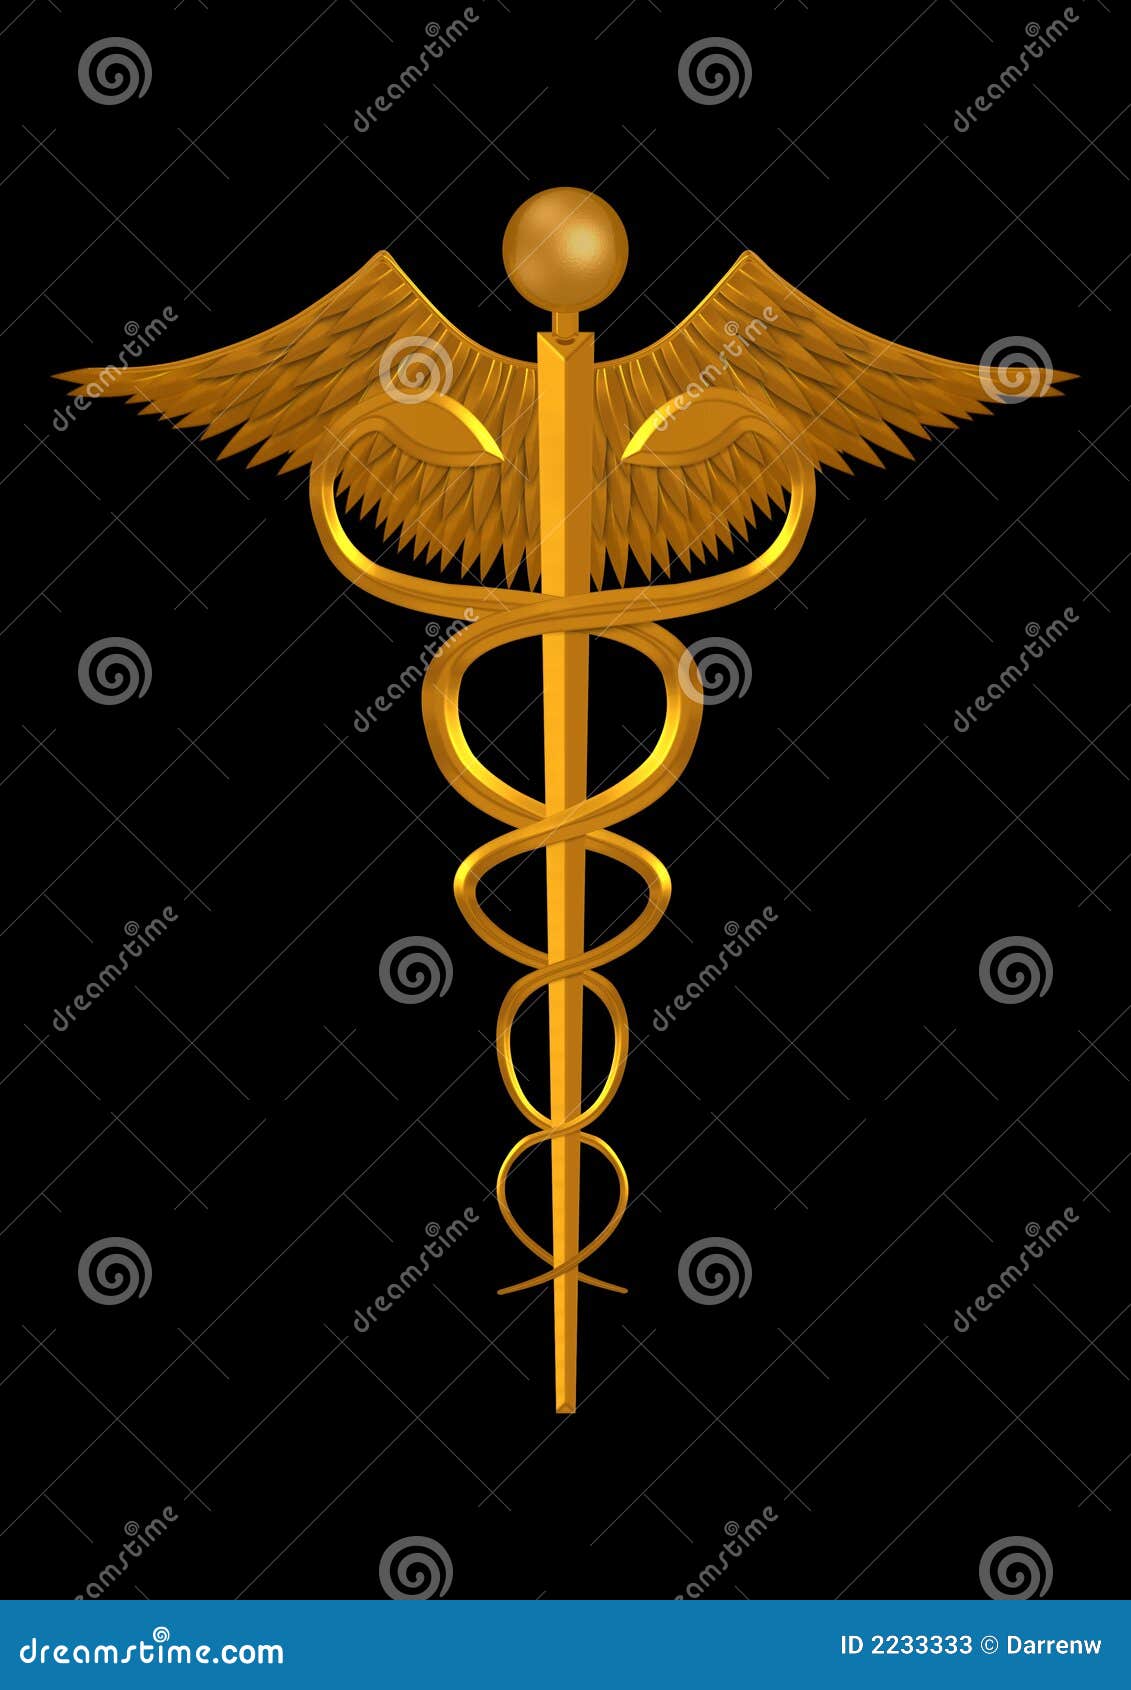 Medical symbol stock illustration. Illustration of gold - 2233333